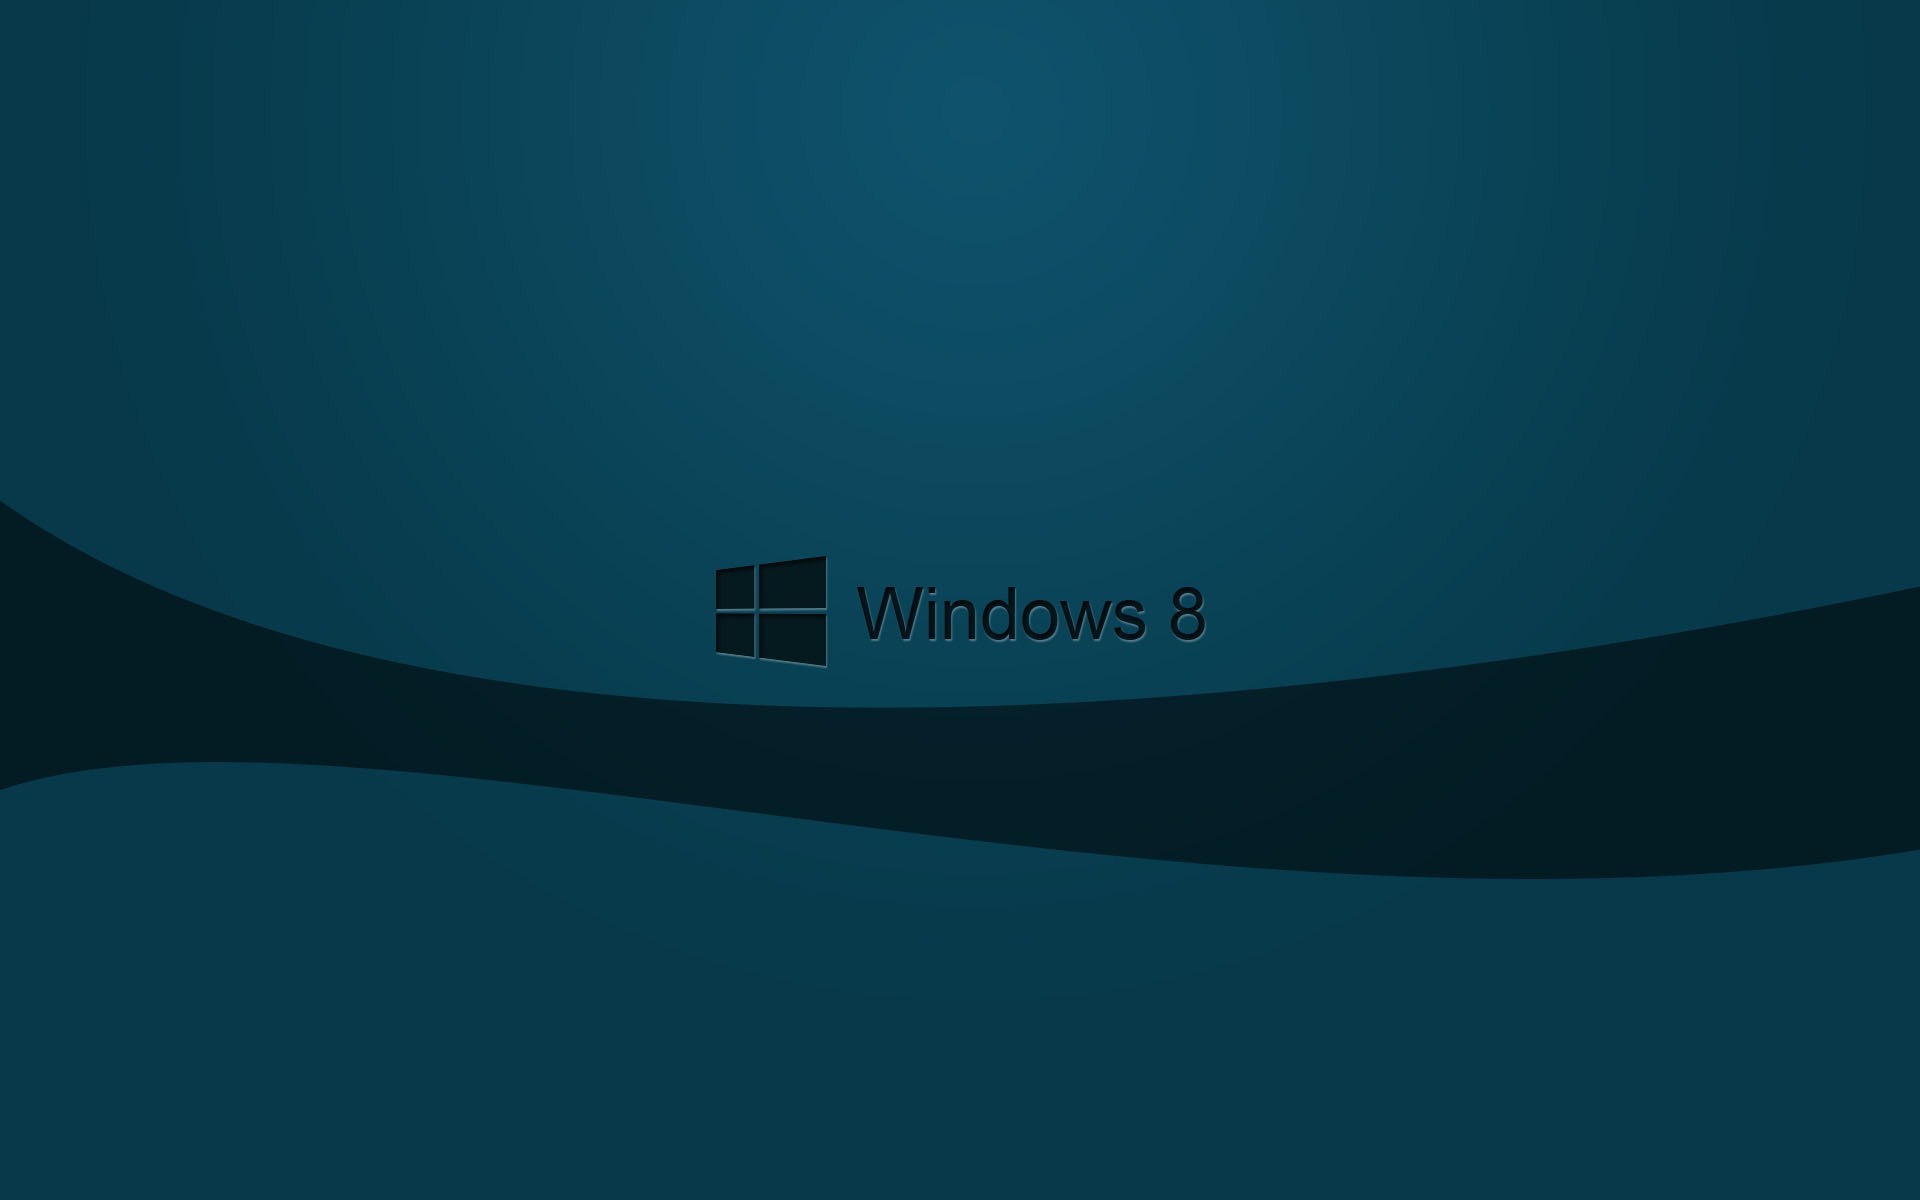 Windows Logo HD Wallpaper Background UHD 2k 4k 5k